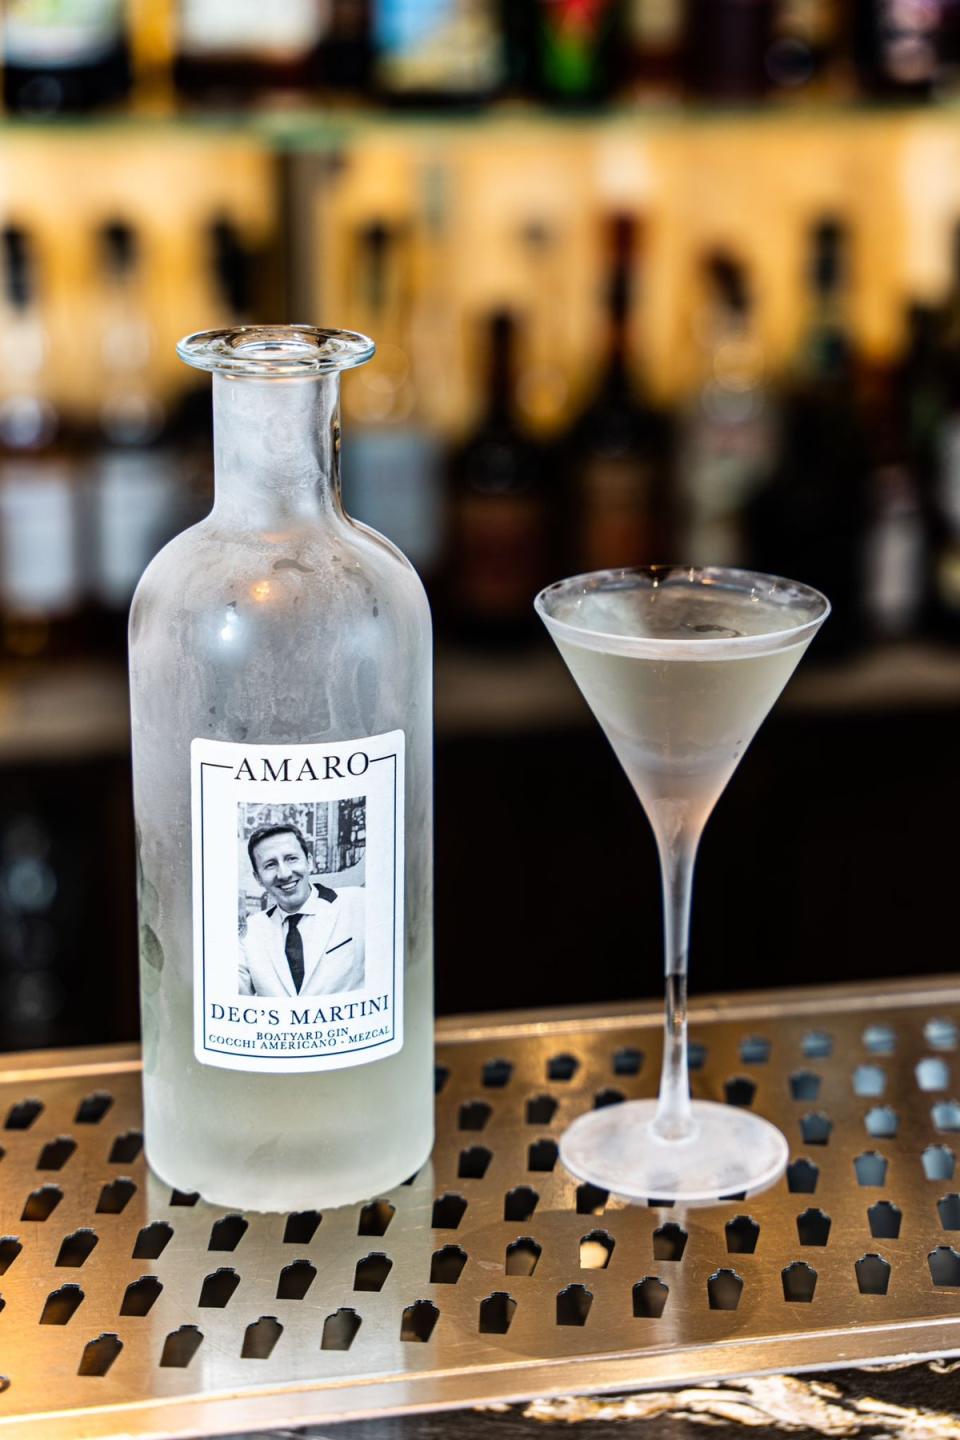 Dec's Martini at Amaro Bar (Press handout)